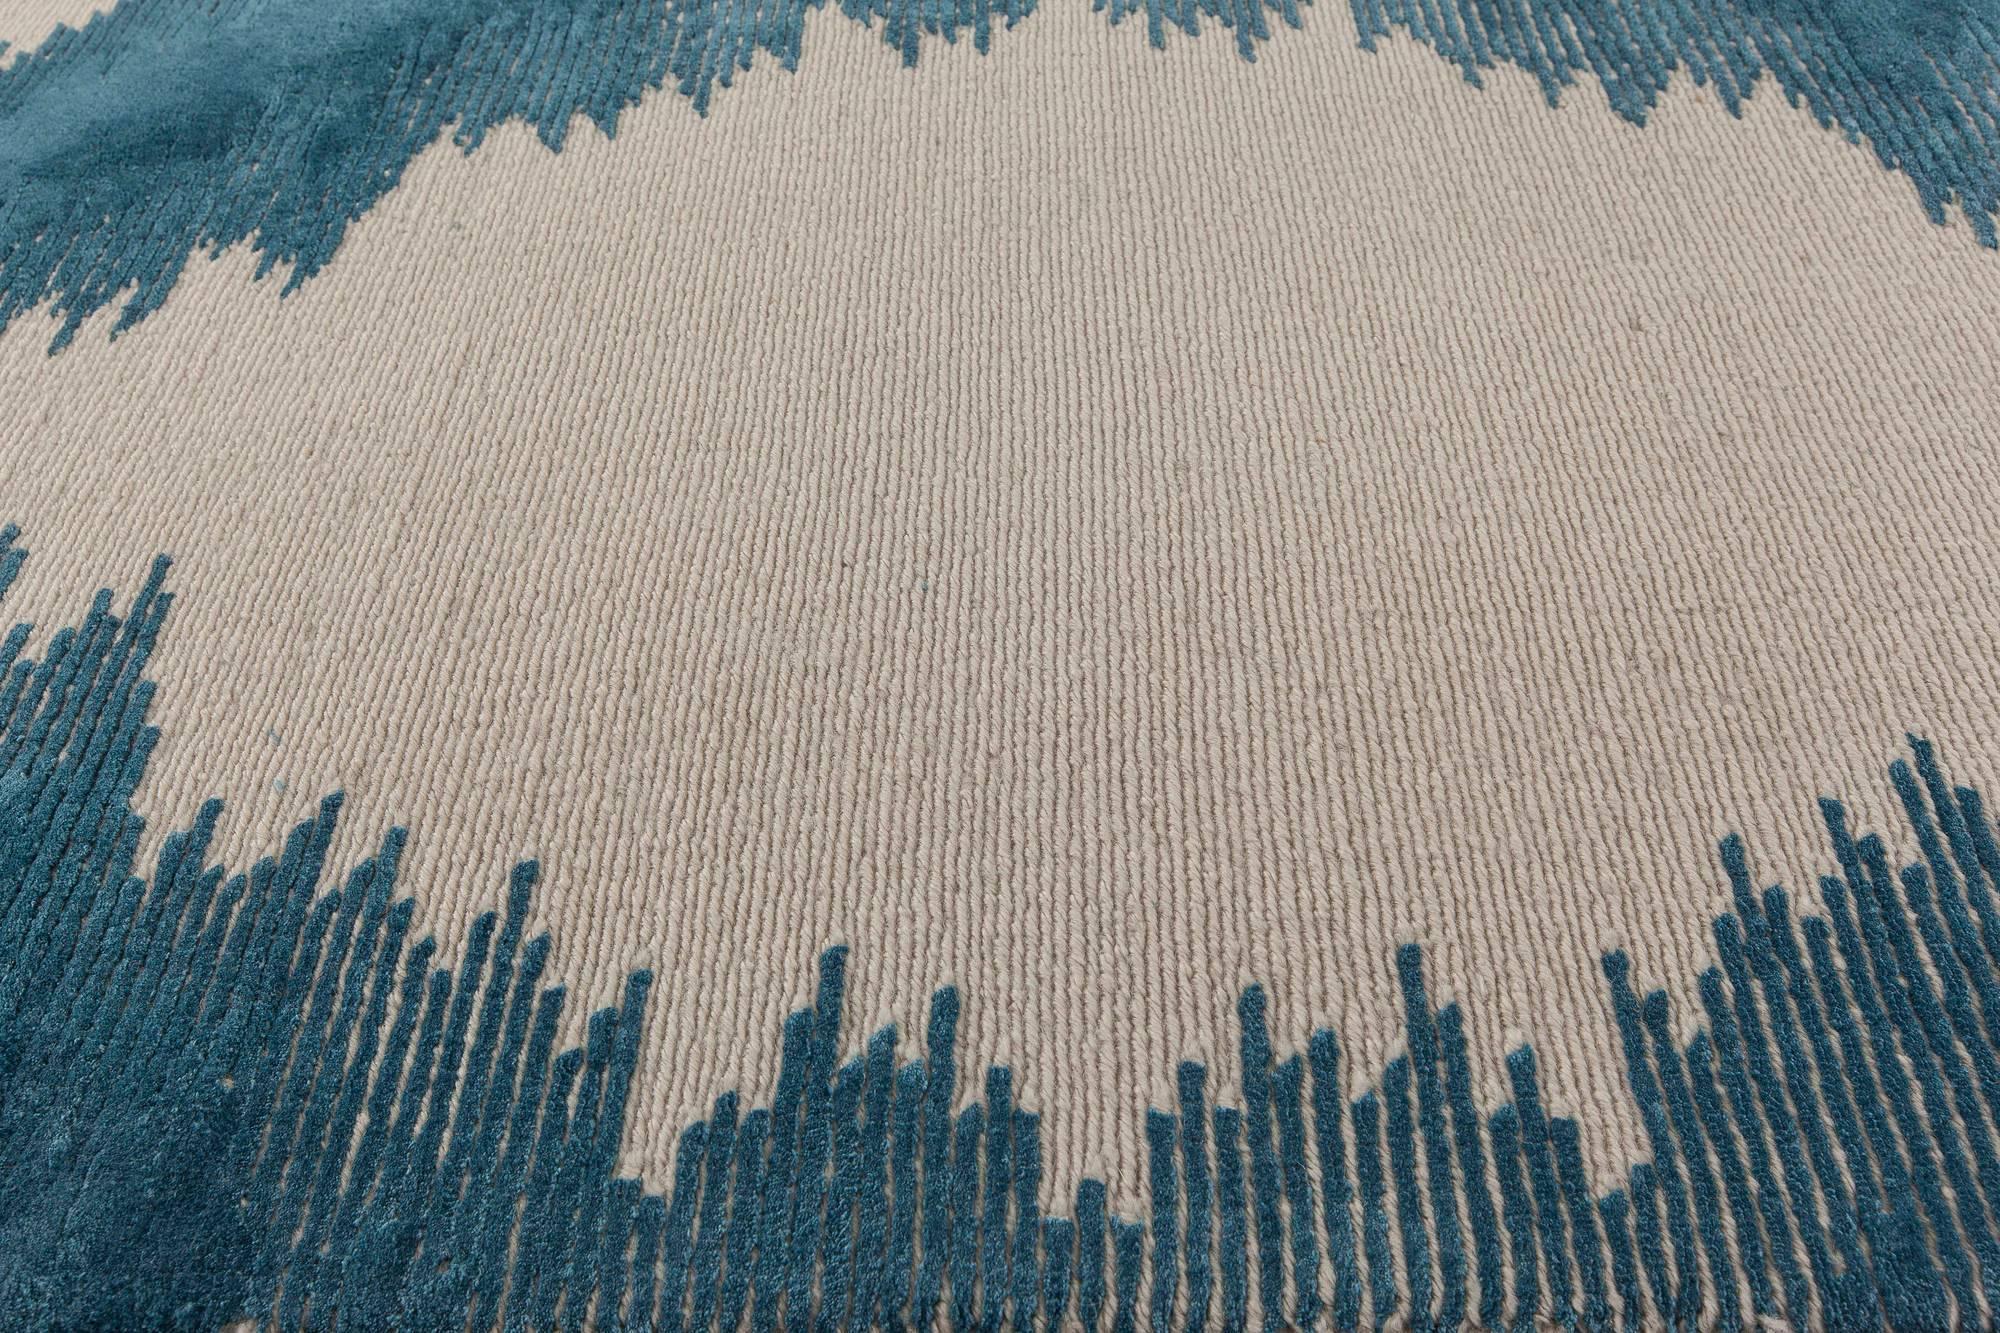 Modern Mandorla handmade silk rug by Doris Leslie Blau.
Size: 13'0